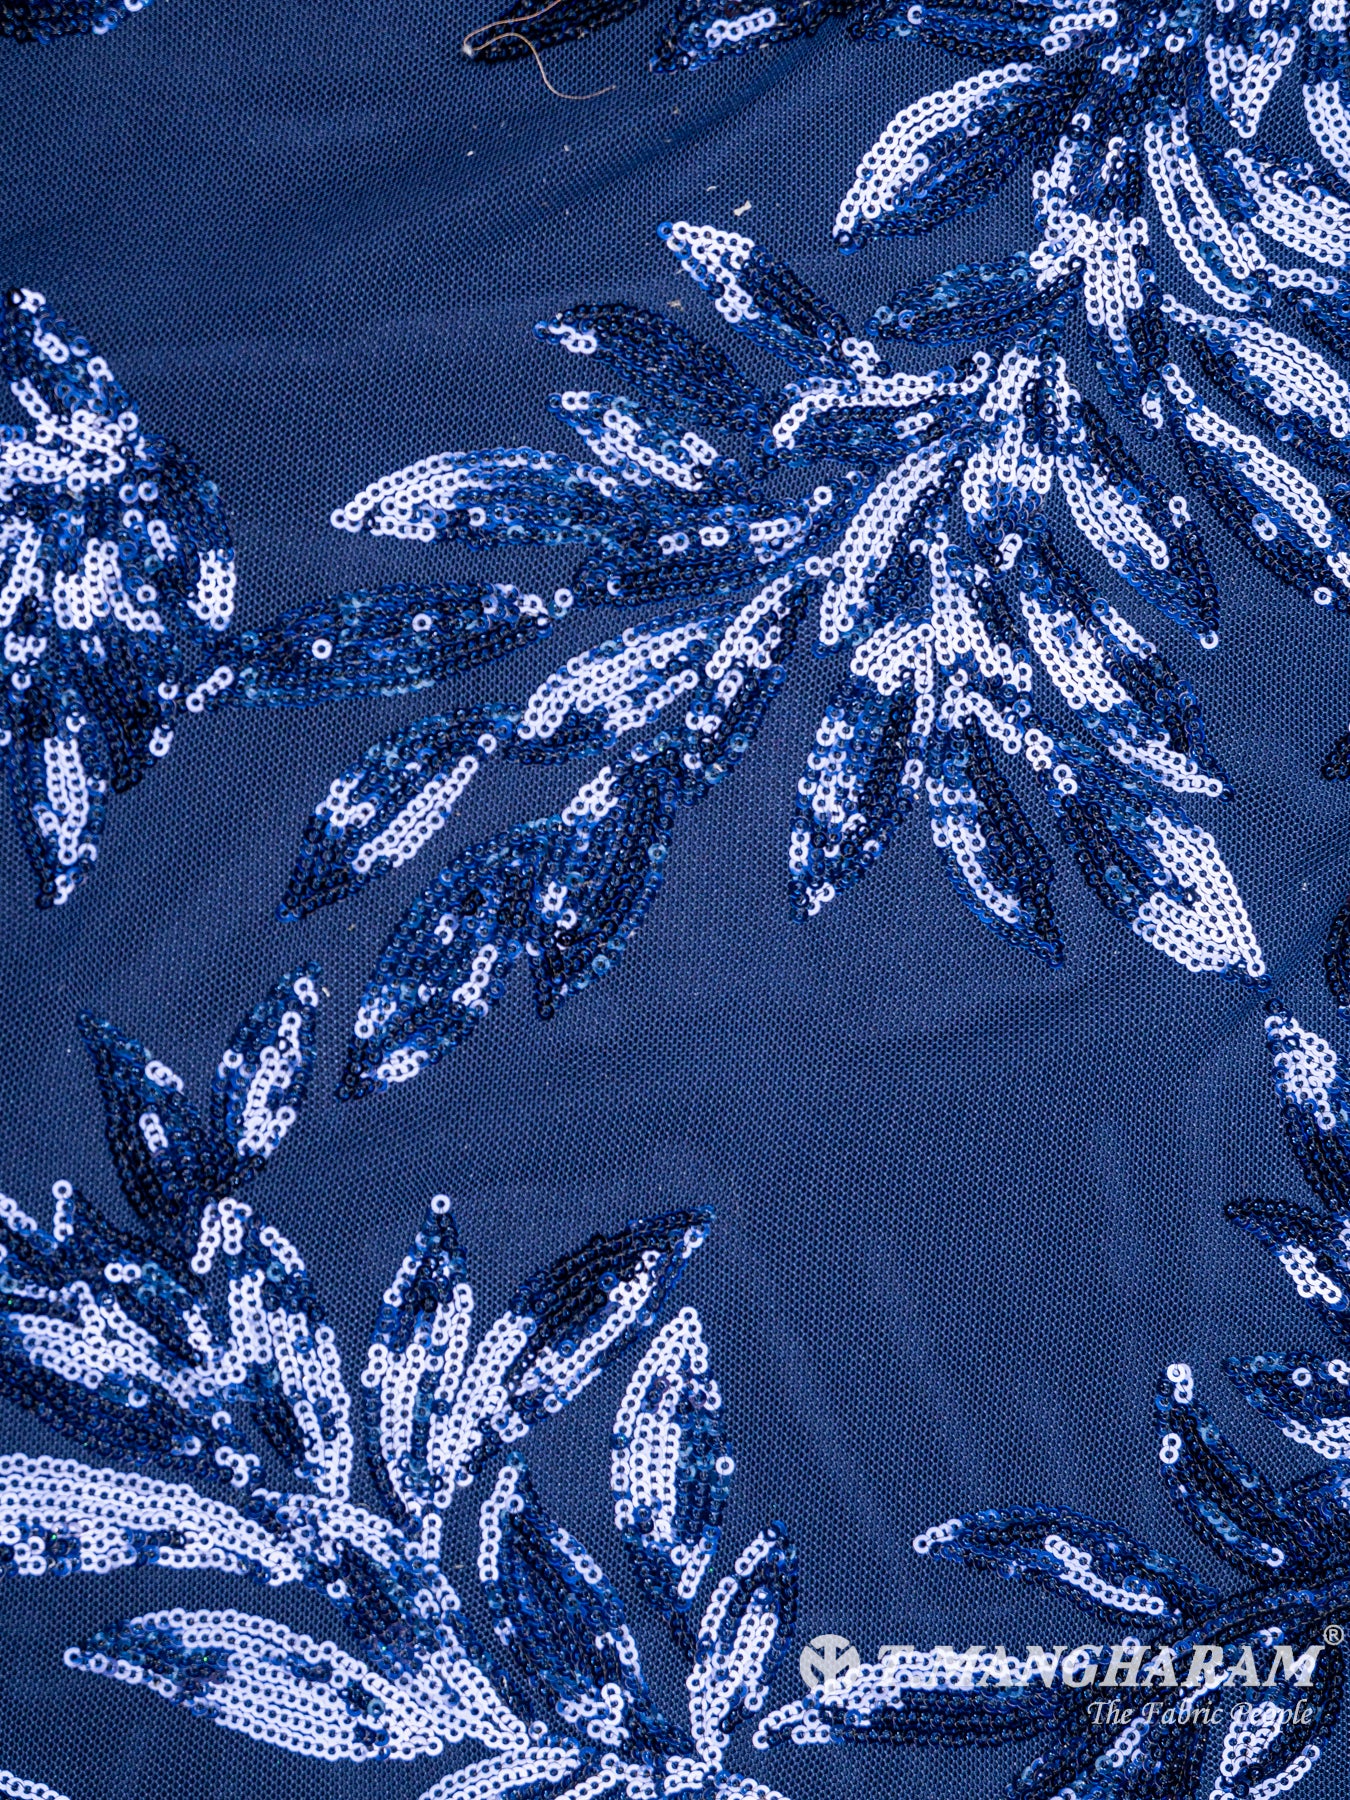 Blue Gold Fancy Net Fabric - EB3933 view-3